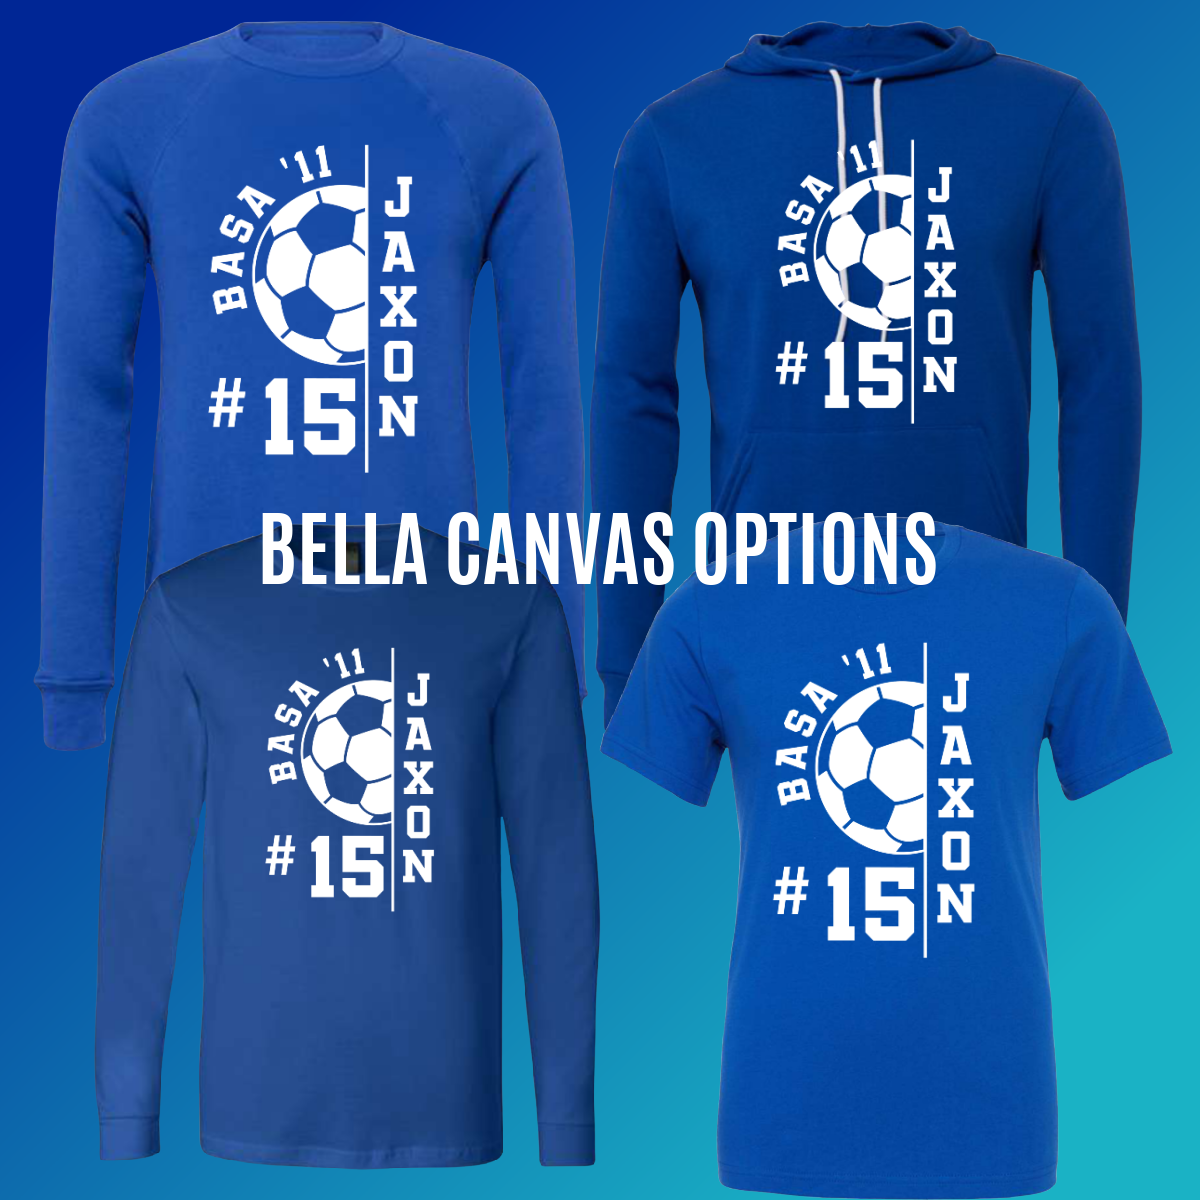 BASA Soccer Tees/Sweatshirts (Youth & Adult) - Option 1 - PREORDER